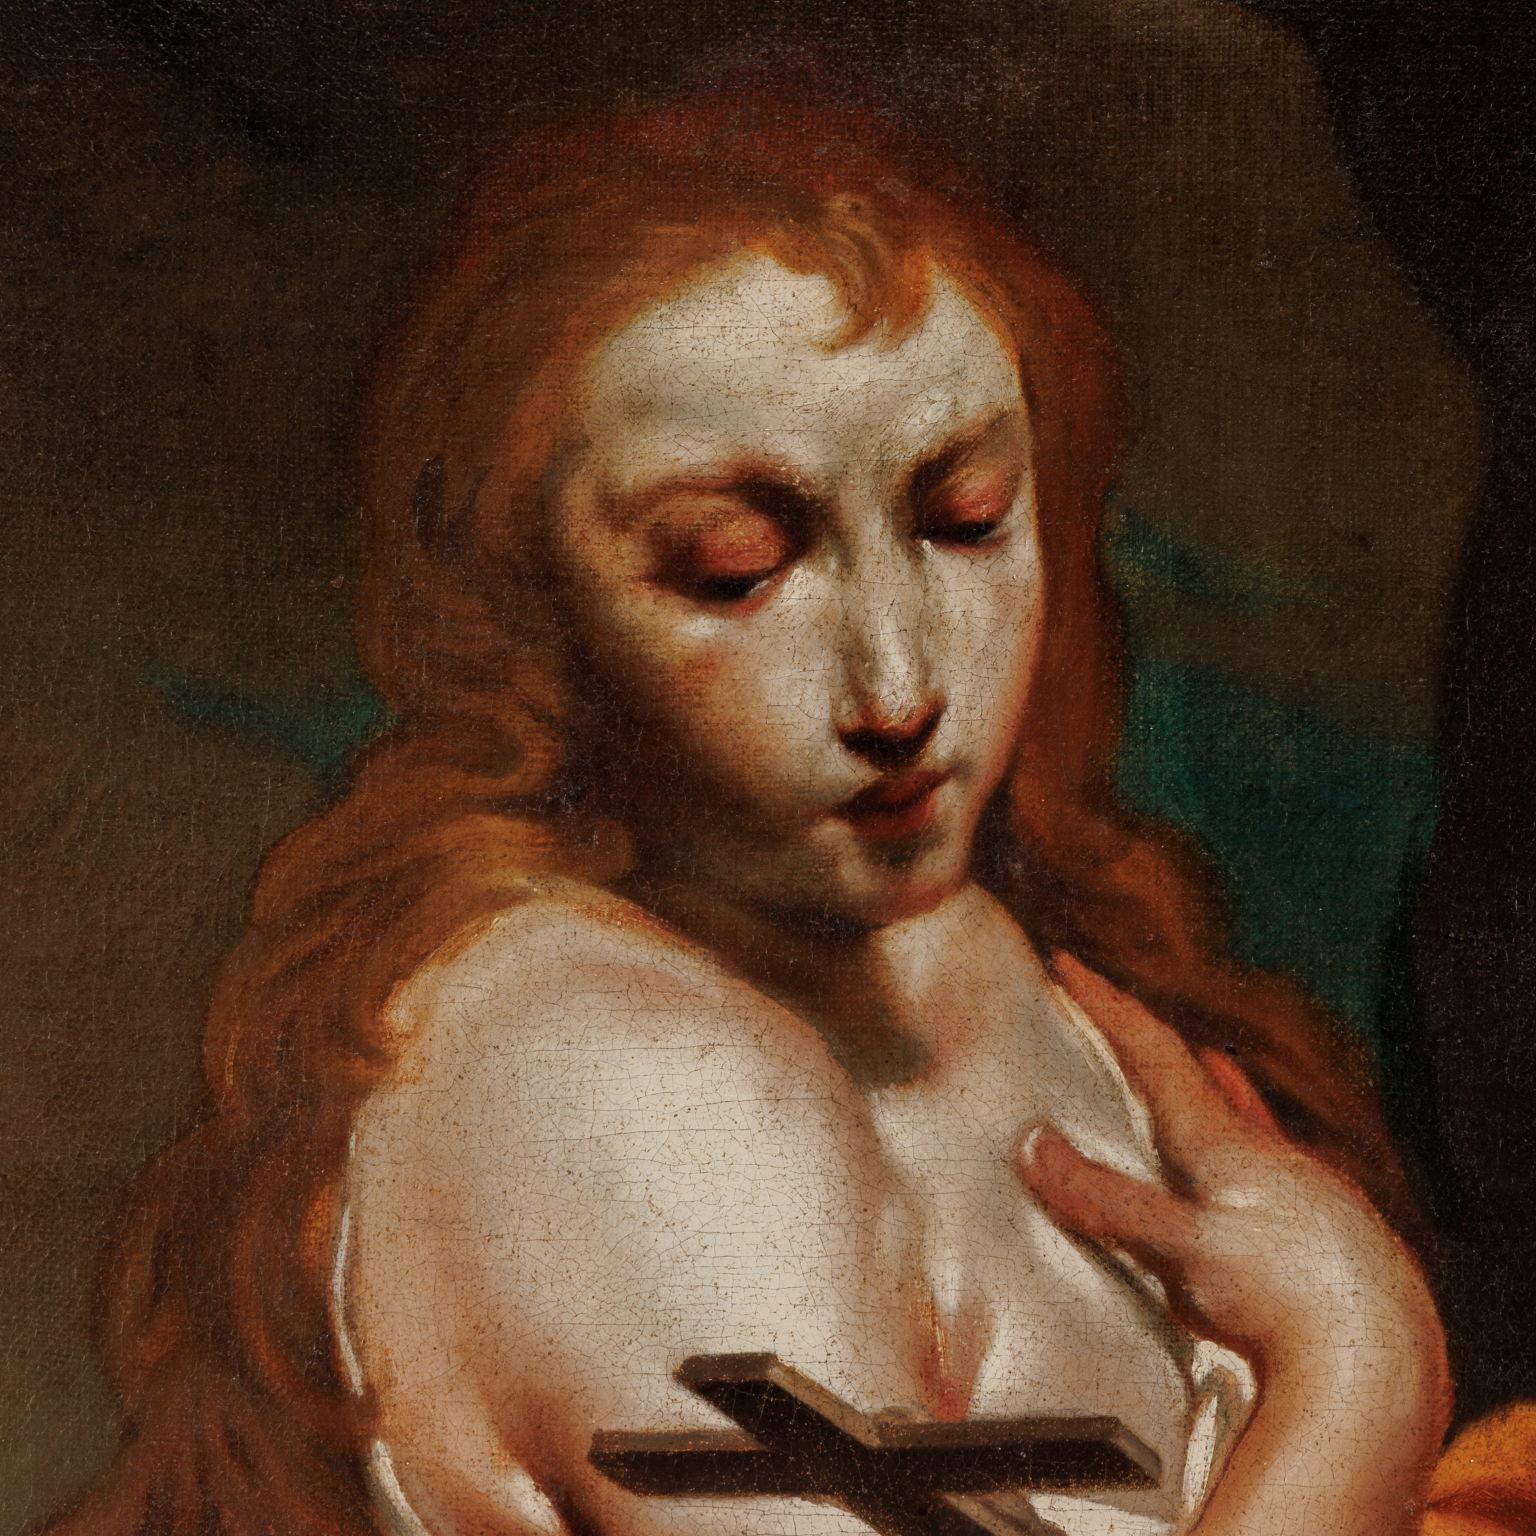 Büßende Magdalena, um 1750. – Painting von Giuseppe Maria Crespi, called Lo Spagnuolo